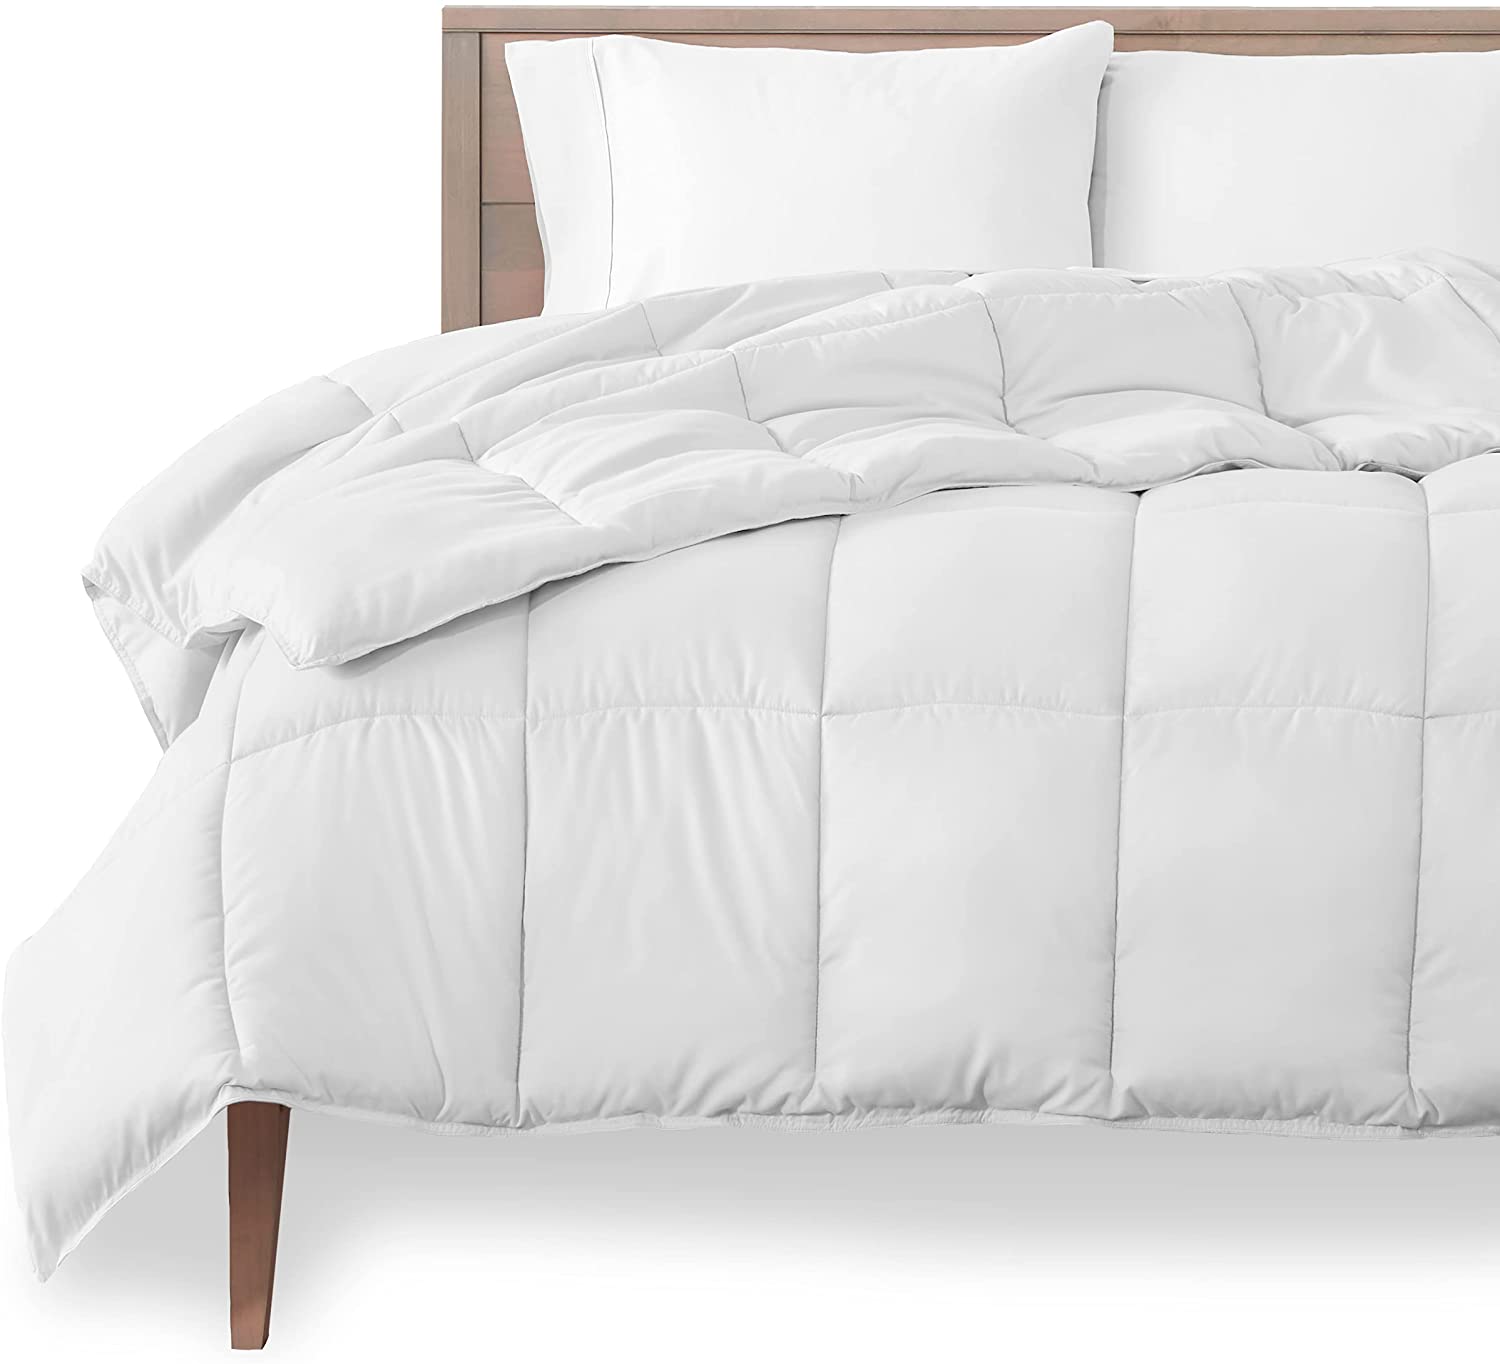 Price:$51.99  Home Duvet Insert Comforter - Queen Size - Goose Down Alternative - Ultra-Soft - Premium 1800 Series - All Season Warmth - Bedding Comforter (Queen, White) : Home & Kitchen